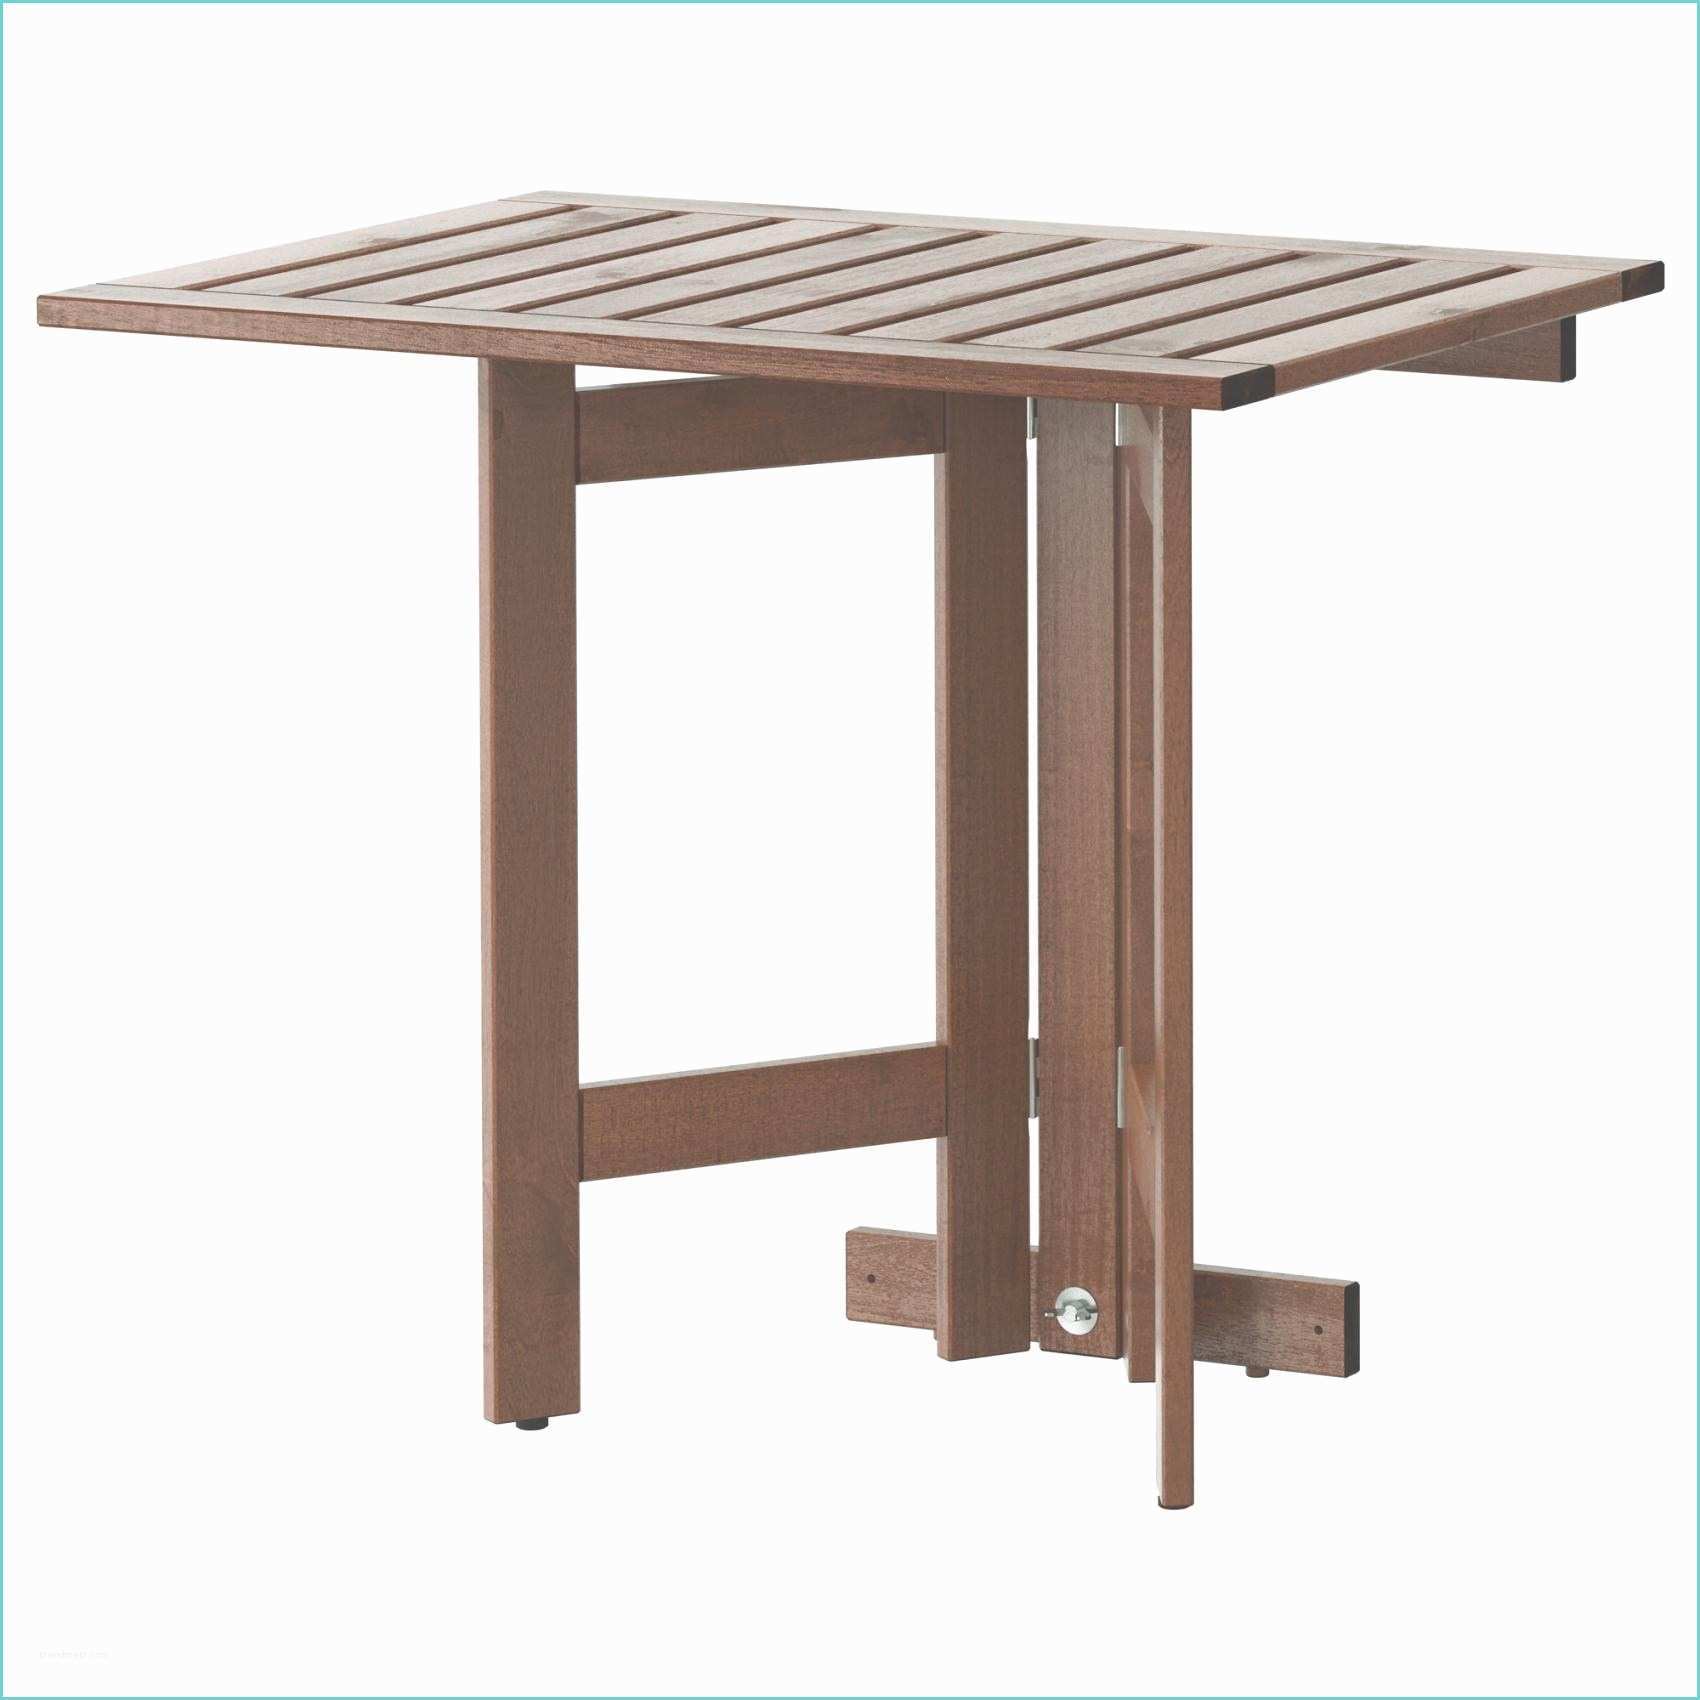 Table Basse Pliante Ikea Awesome Table De Jardin Extensible Petite Ur